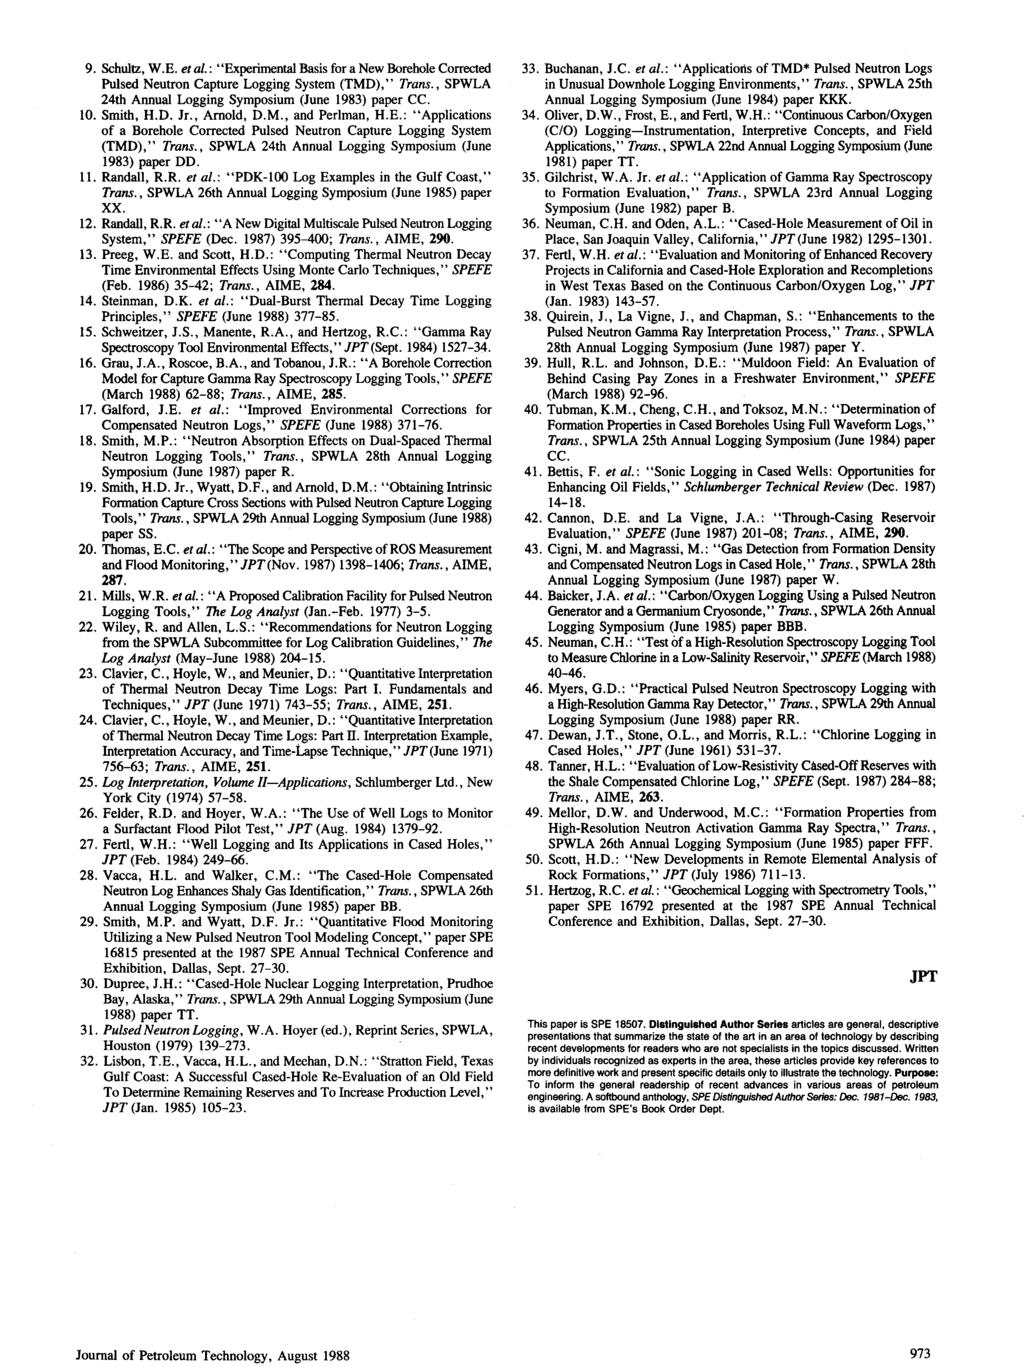 9. Schultz, W.E. et al.: "Experimental Basis for a New Borehole Corrected Pulsed Neutron Capture Logging System (TMD)," Trans., SPWLA 24th Annual Logging Symposium (June 1983) paper CC. 10. Smith, H.